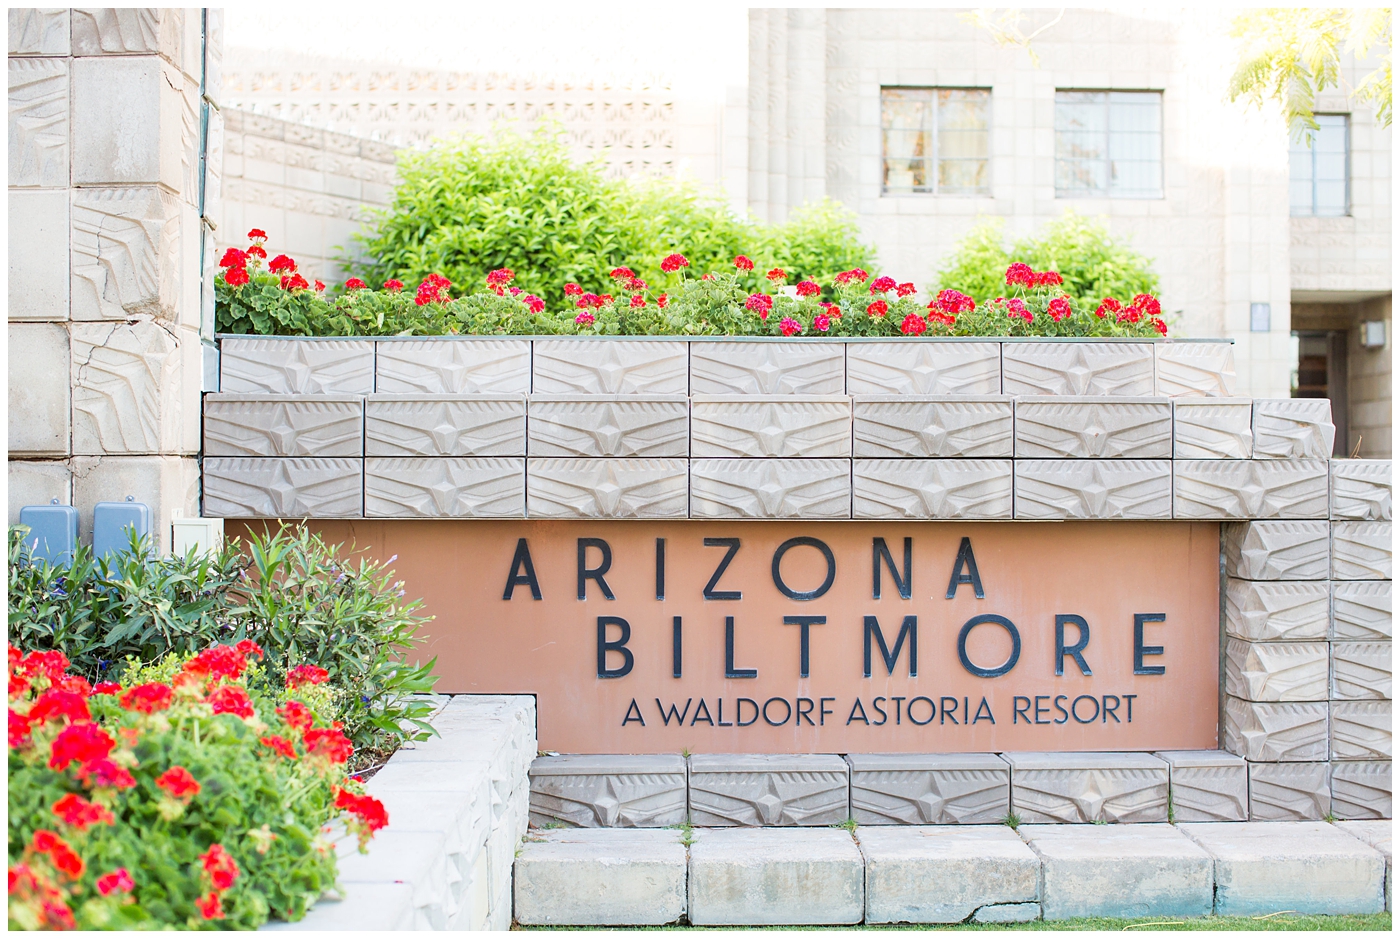 historic Arizona Biltmore sign